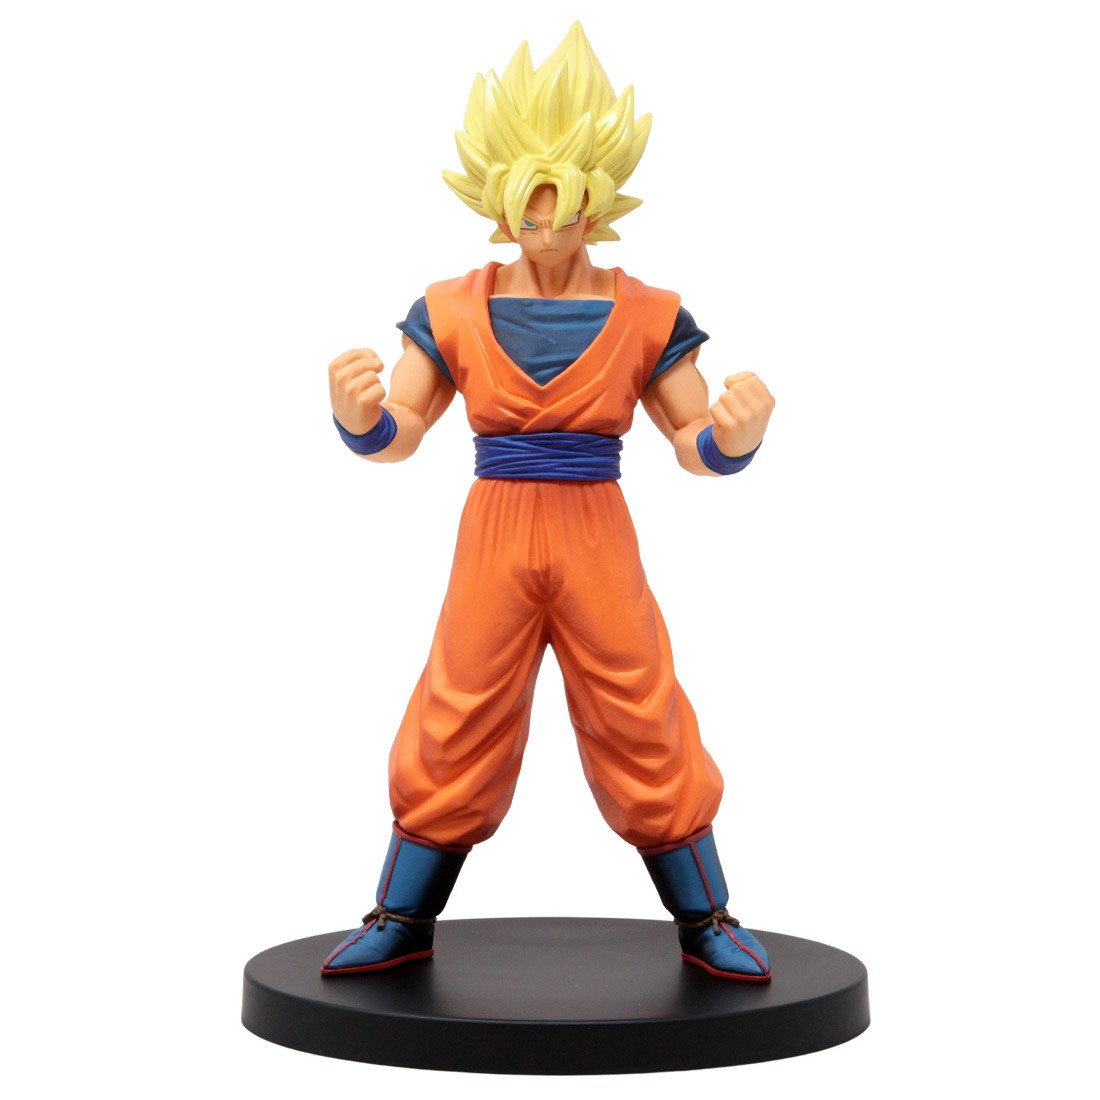 Banpresto Dragon Ball Z Burning Fighters Vol. 1 Super Saiyan Son Goku Figure (orange)